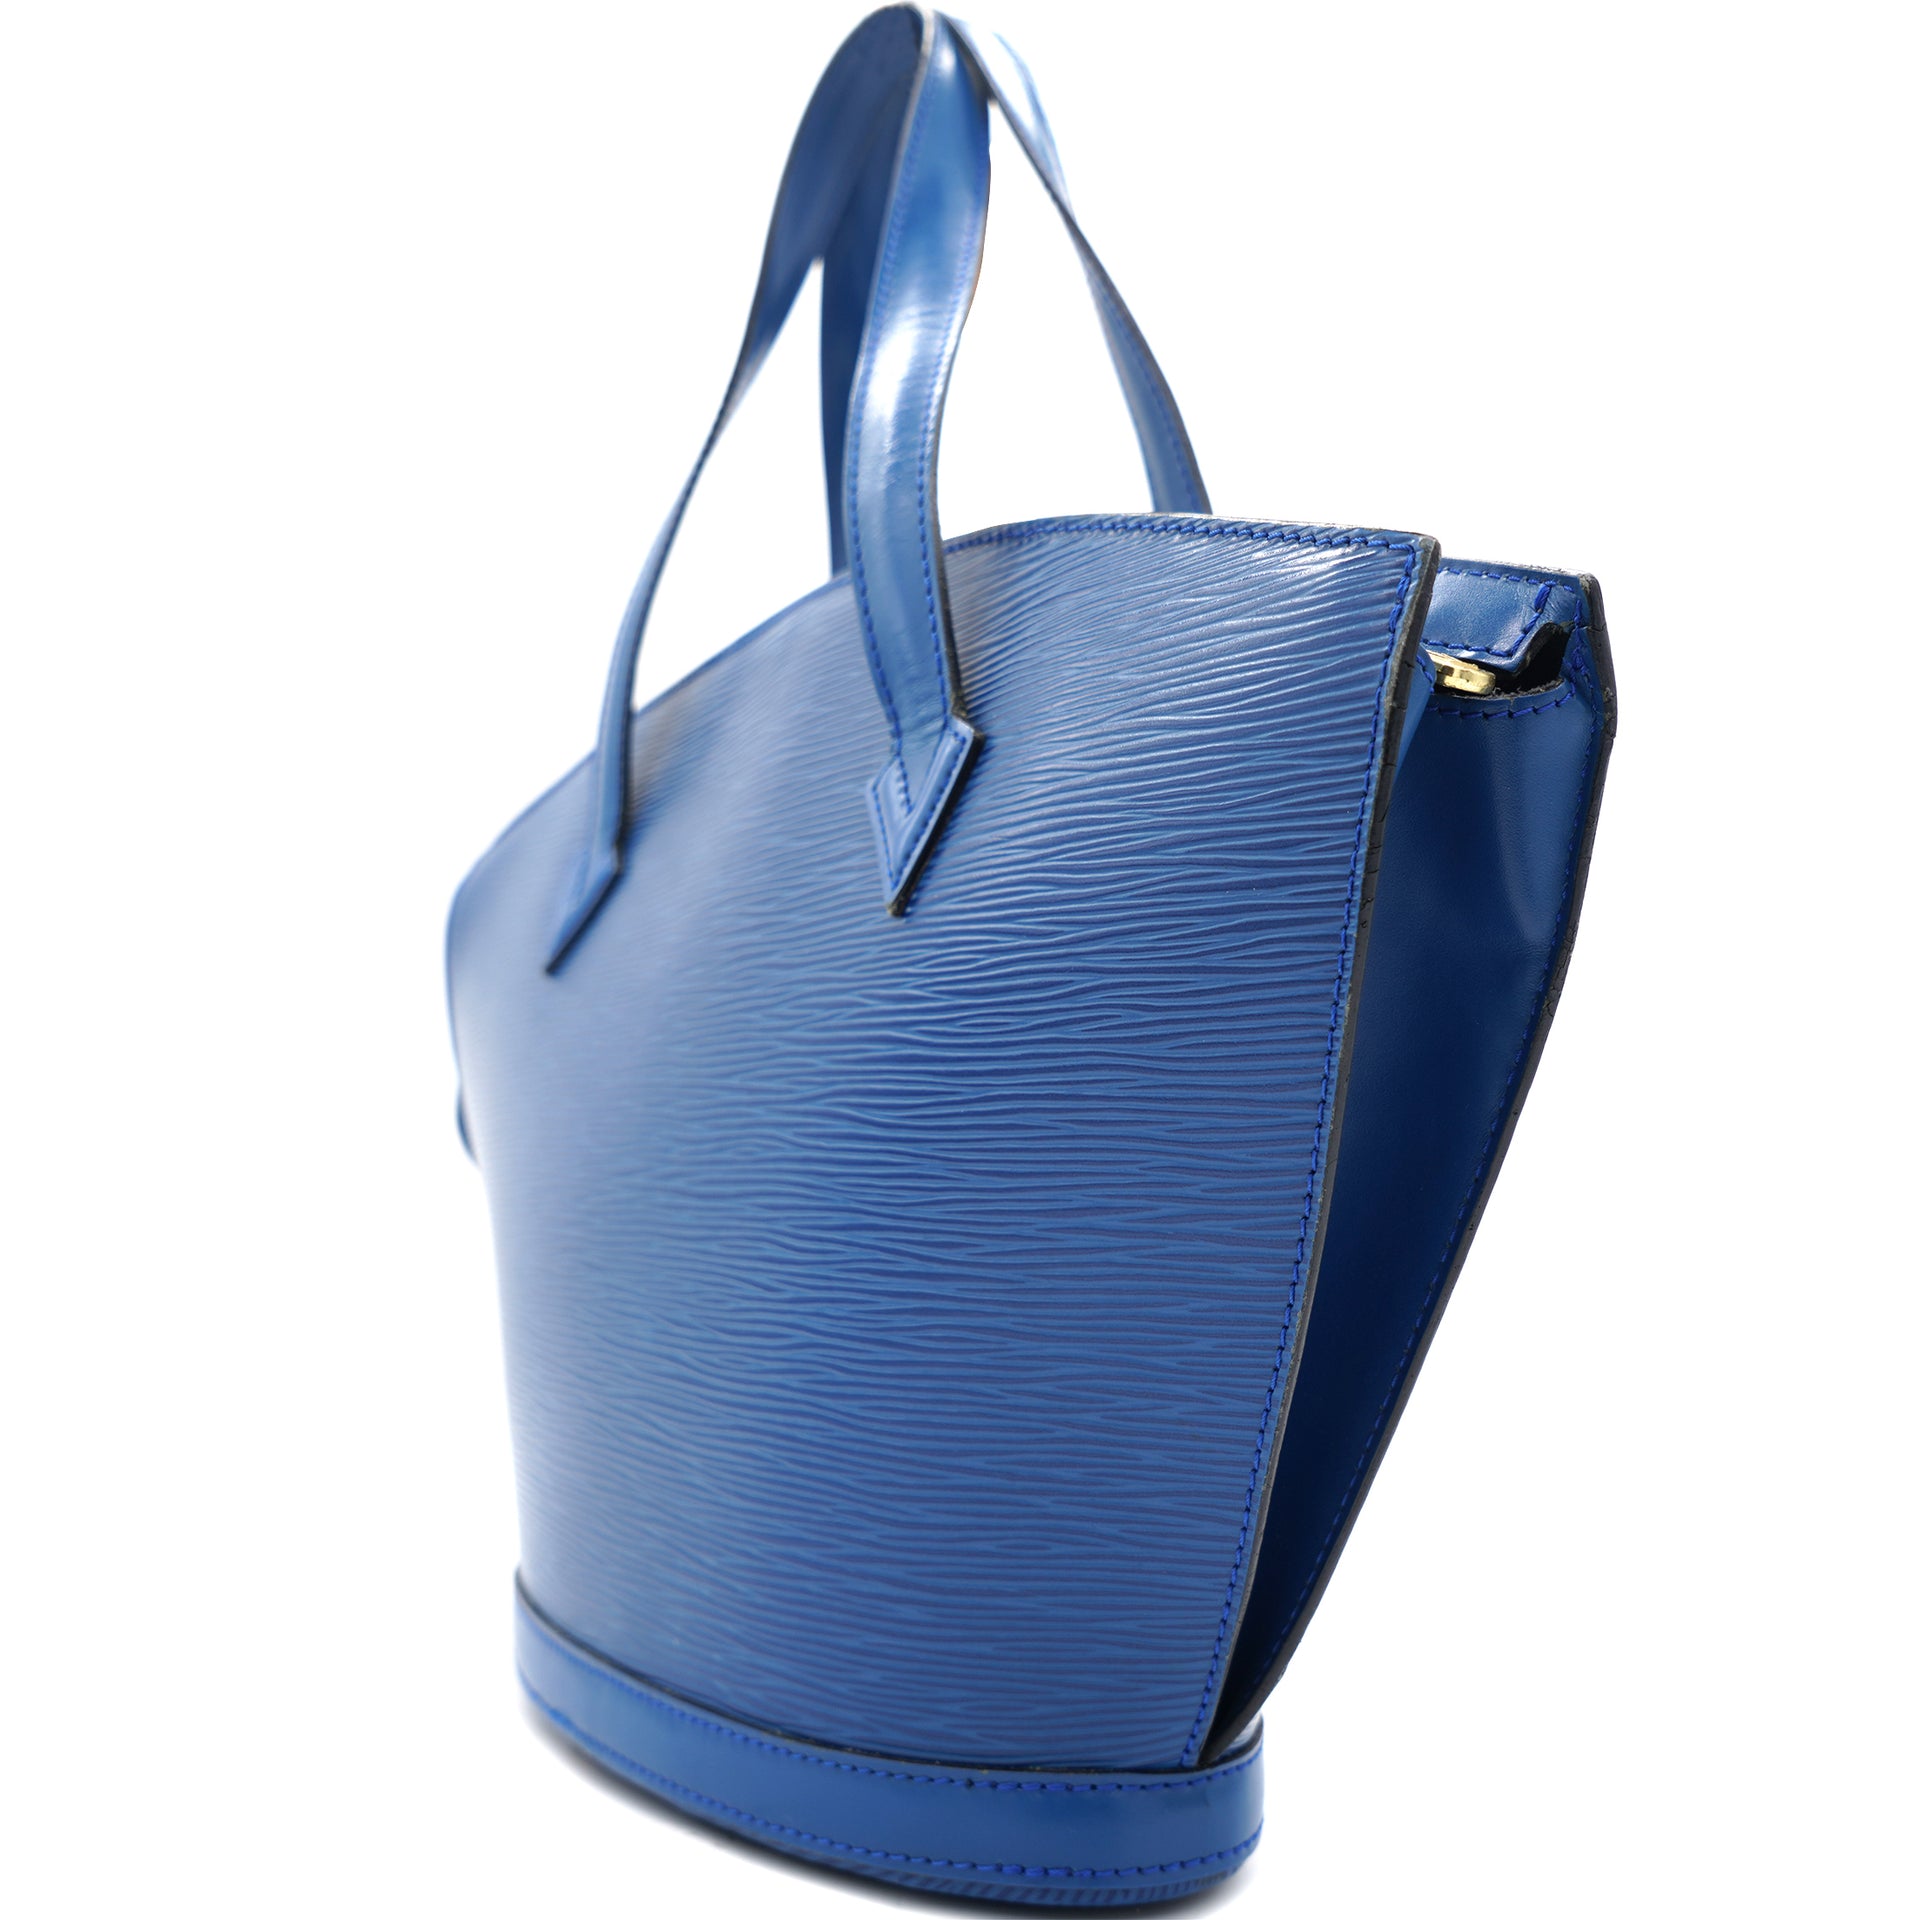 Blue Saint Jacques Handbag